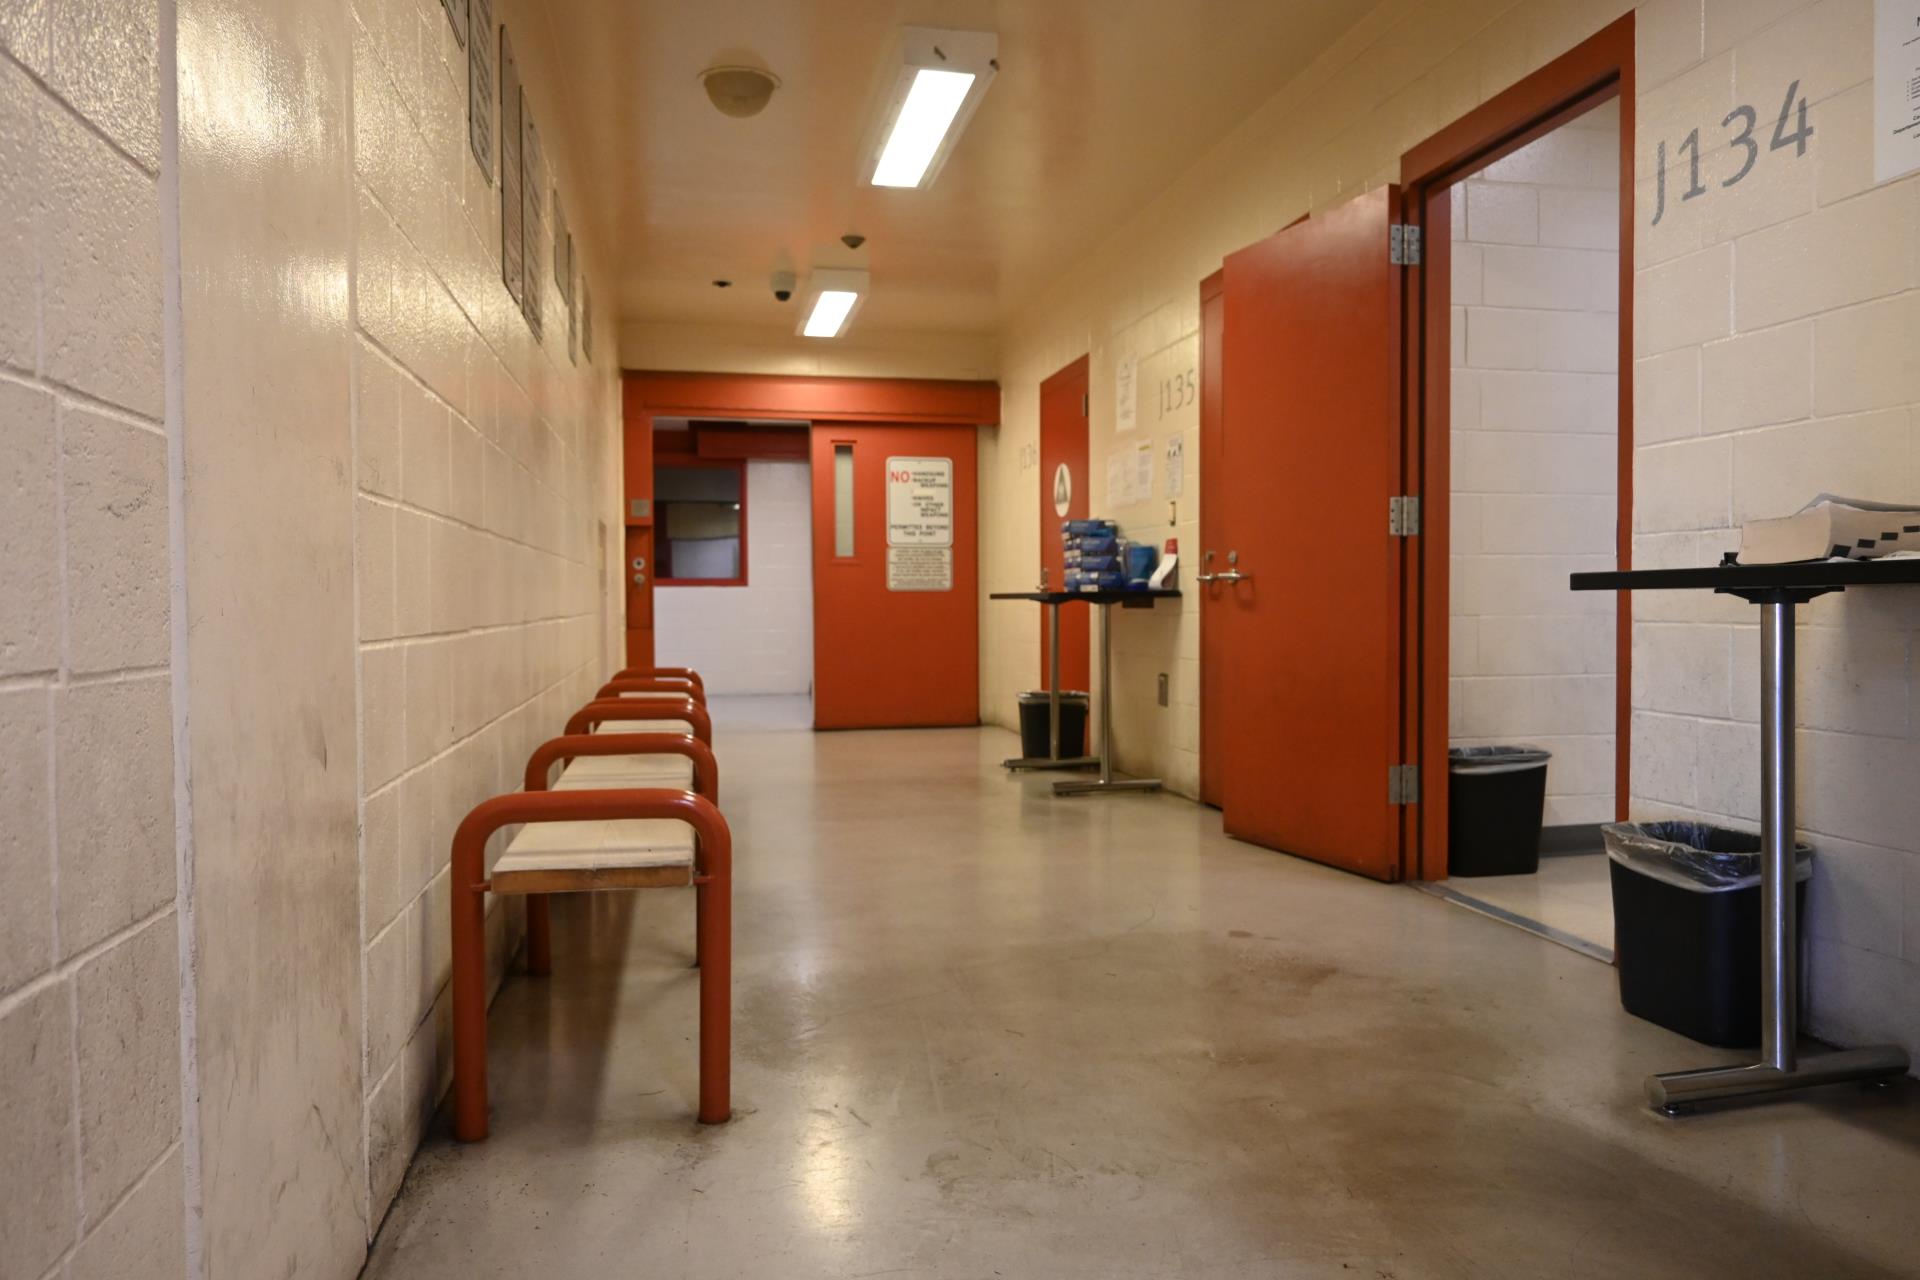 Jail entry hallway